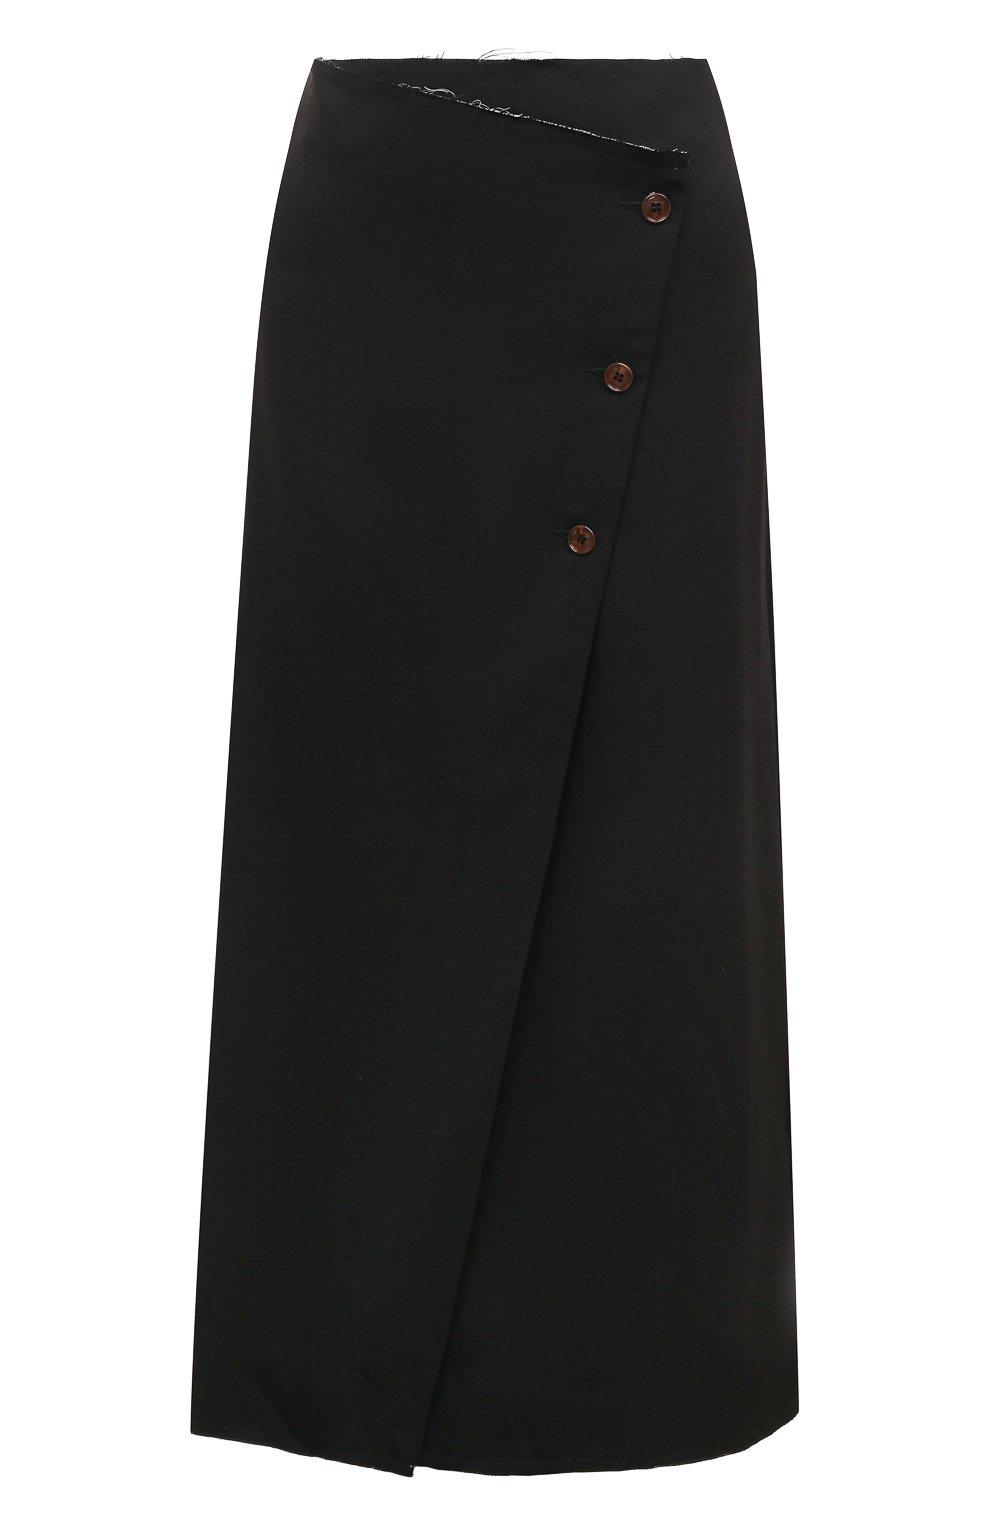 Woolen skirt, Erika Cavallini, 56 150 rubles.